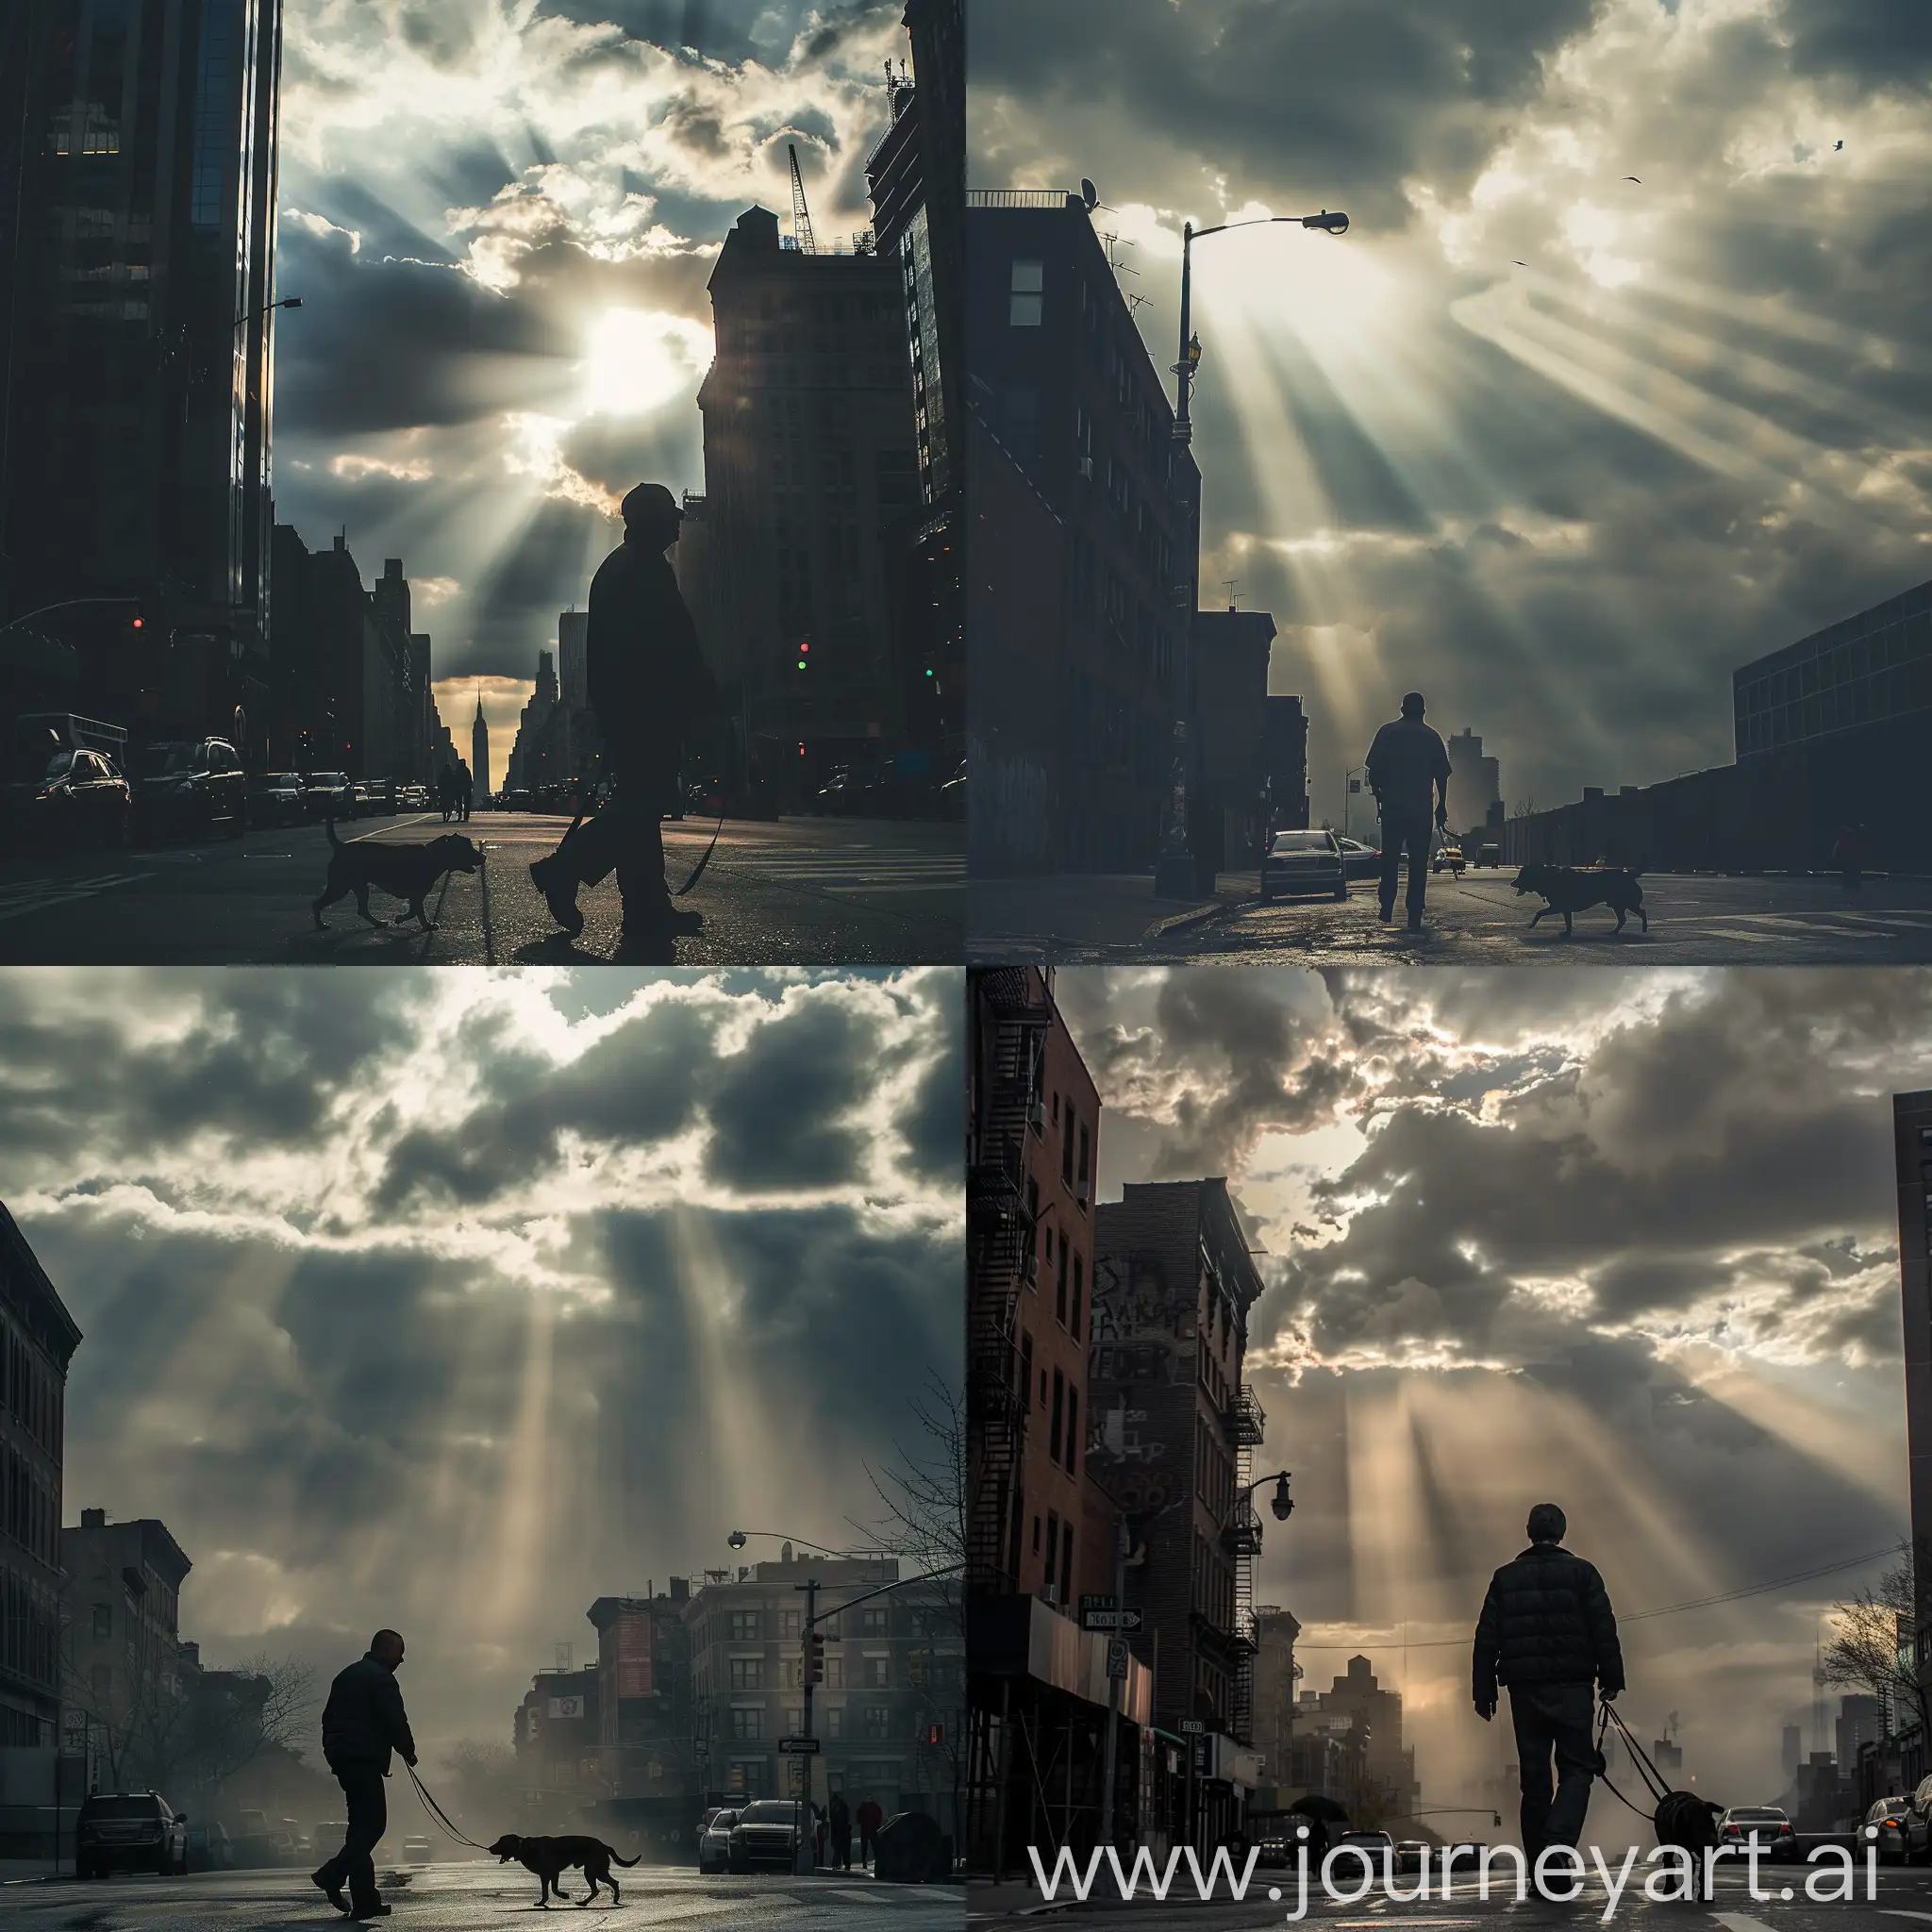 Urban-Morning-Stroll-Man-Walking-Dog-under-Cloudy-Sky-with-Sunlight